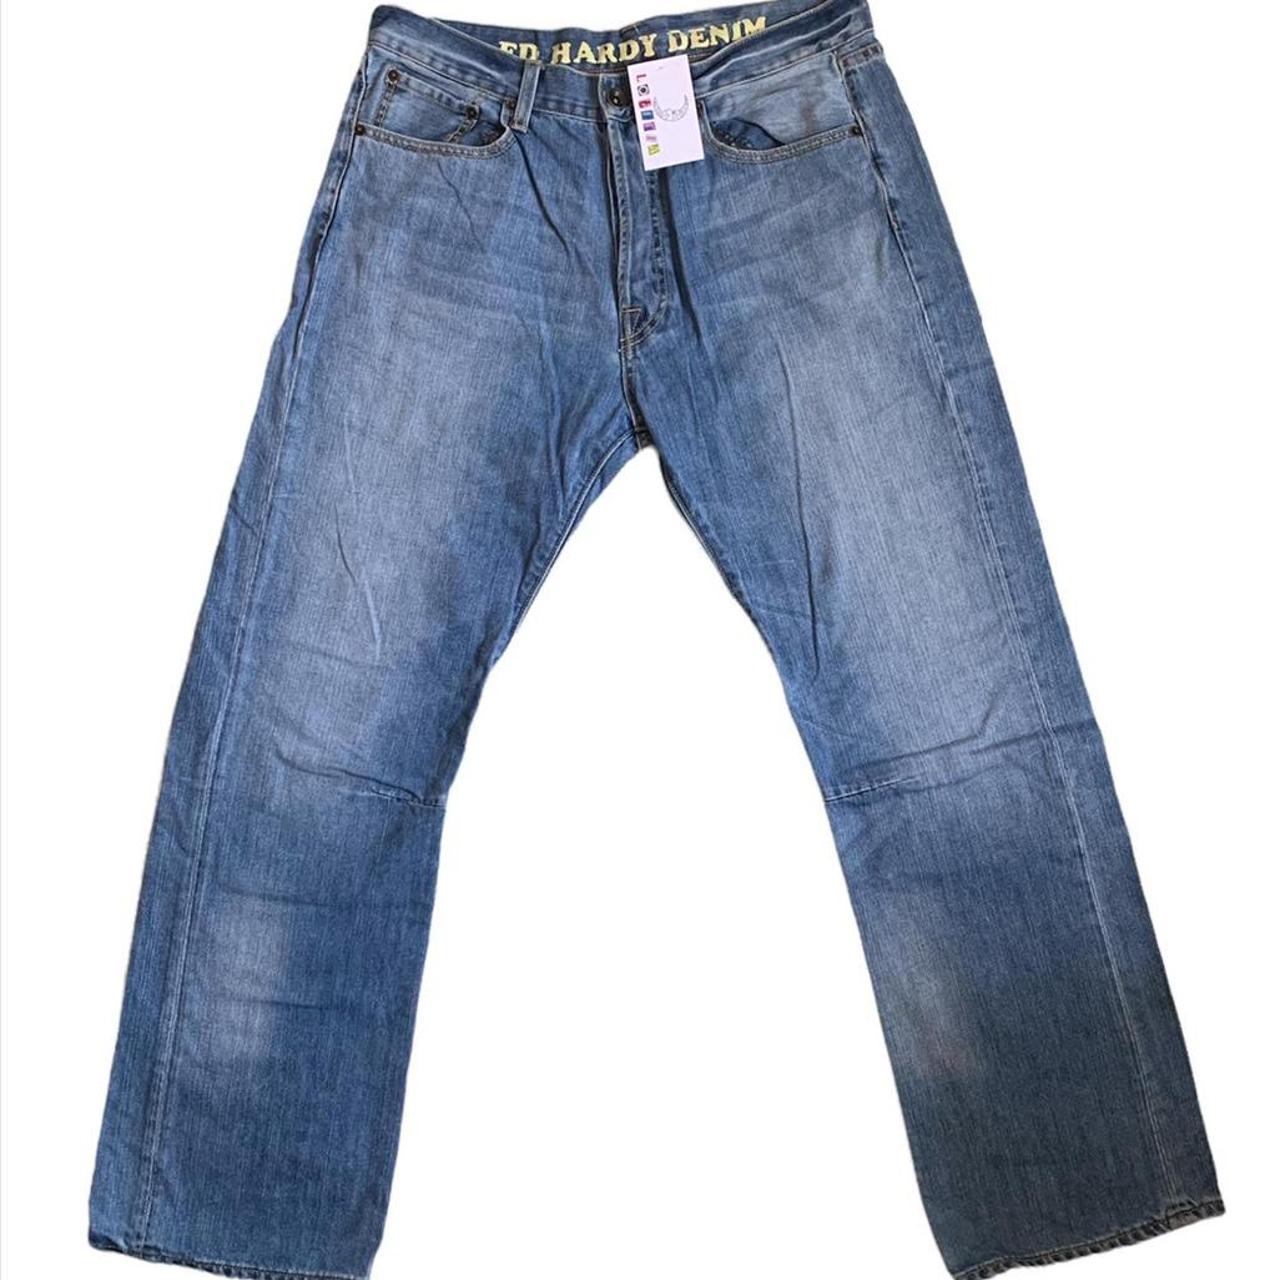 Vintage Ed Hardy Spellout Jeans Size:34x34 Jeans... - Depop